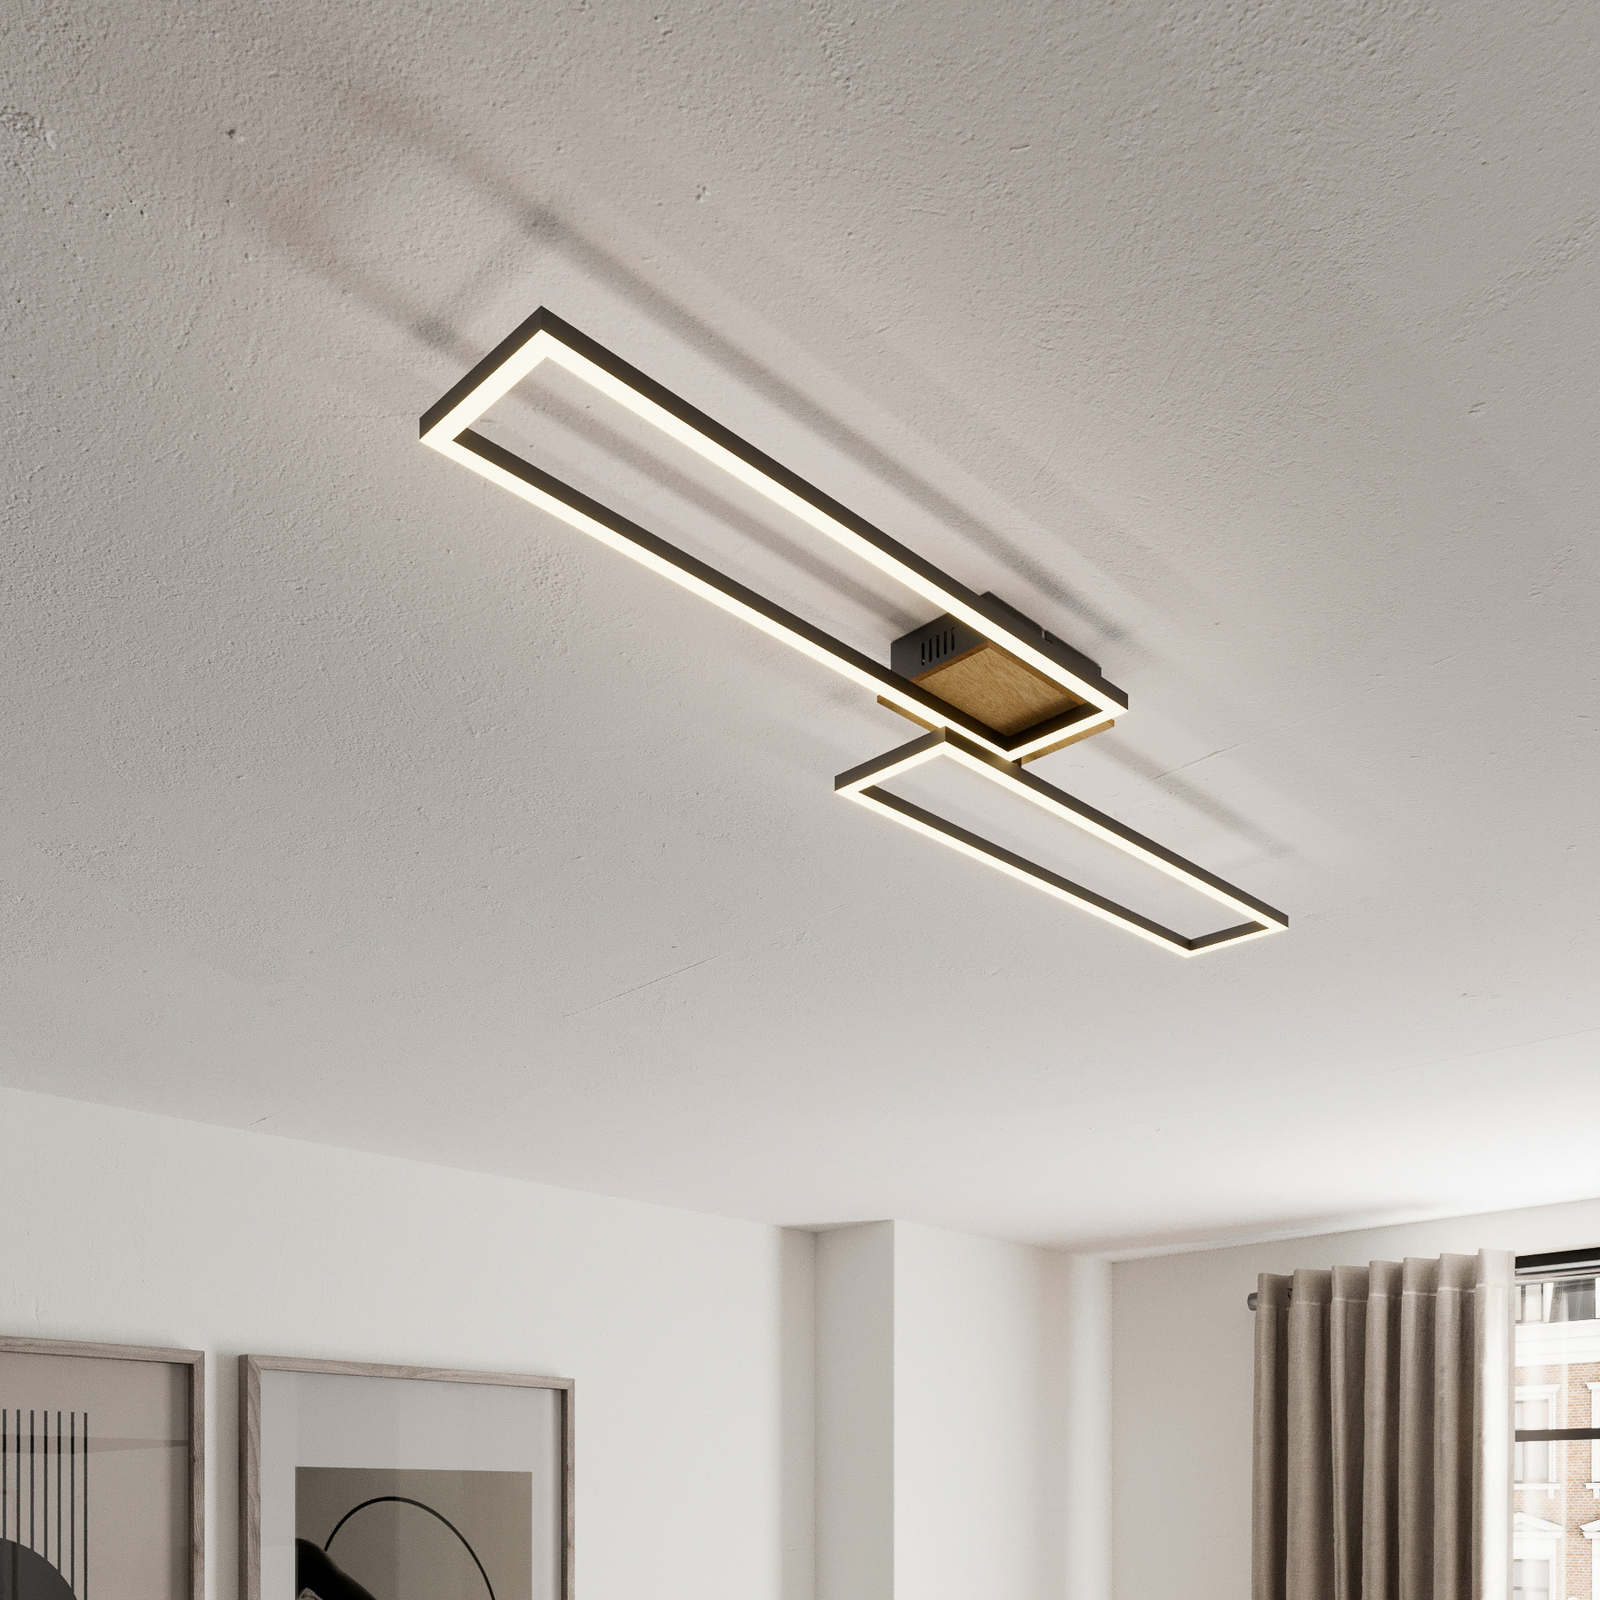 Frame LED ceiling light, remote control